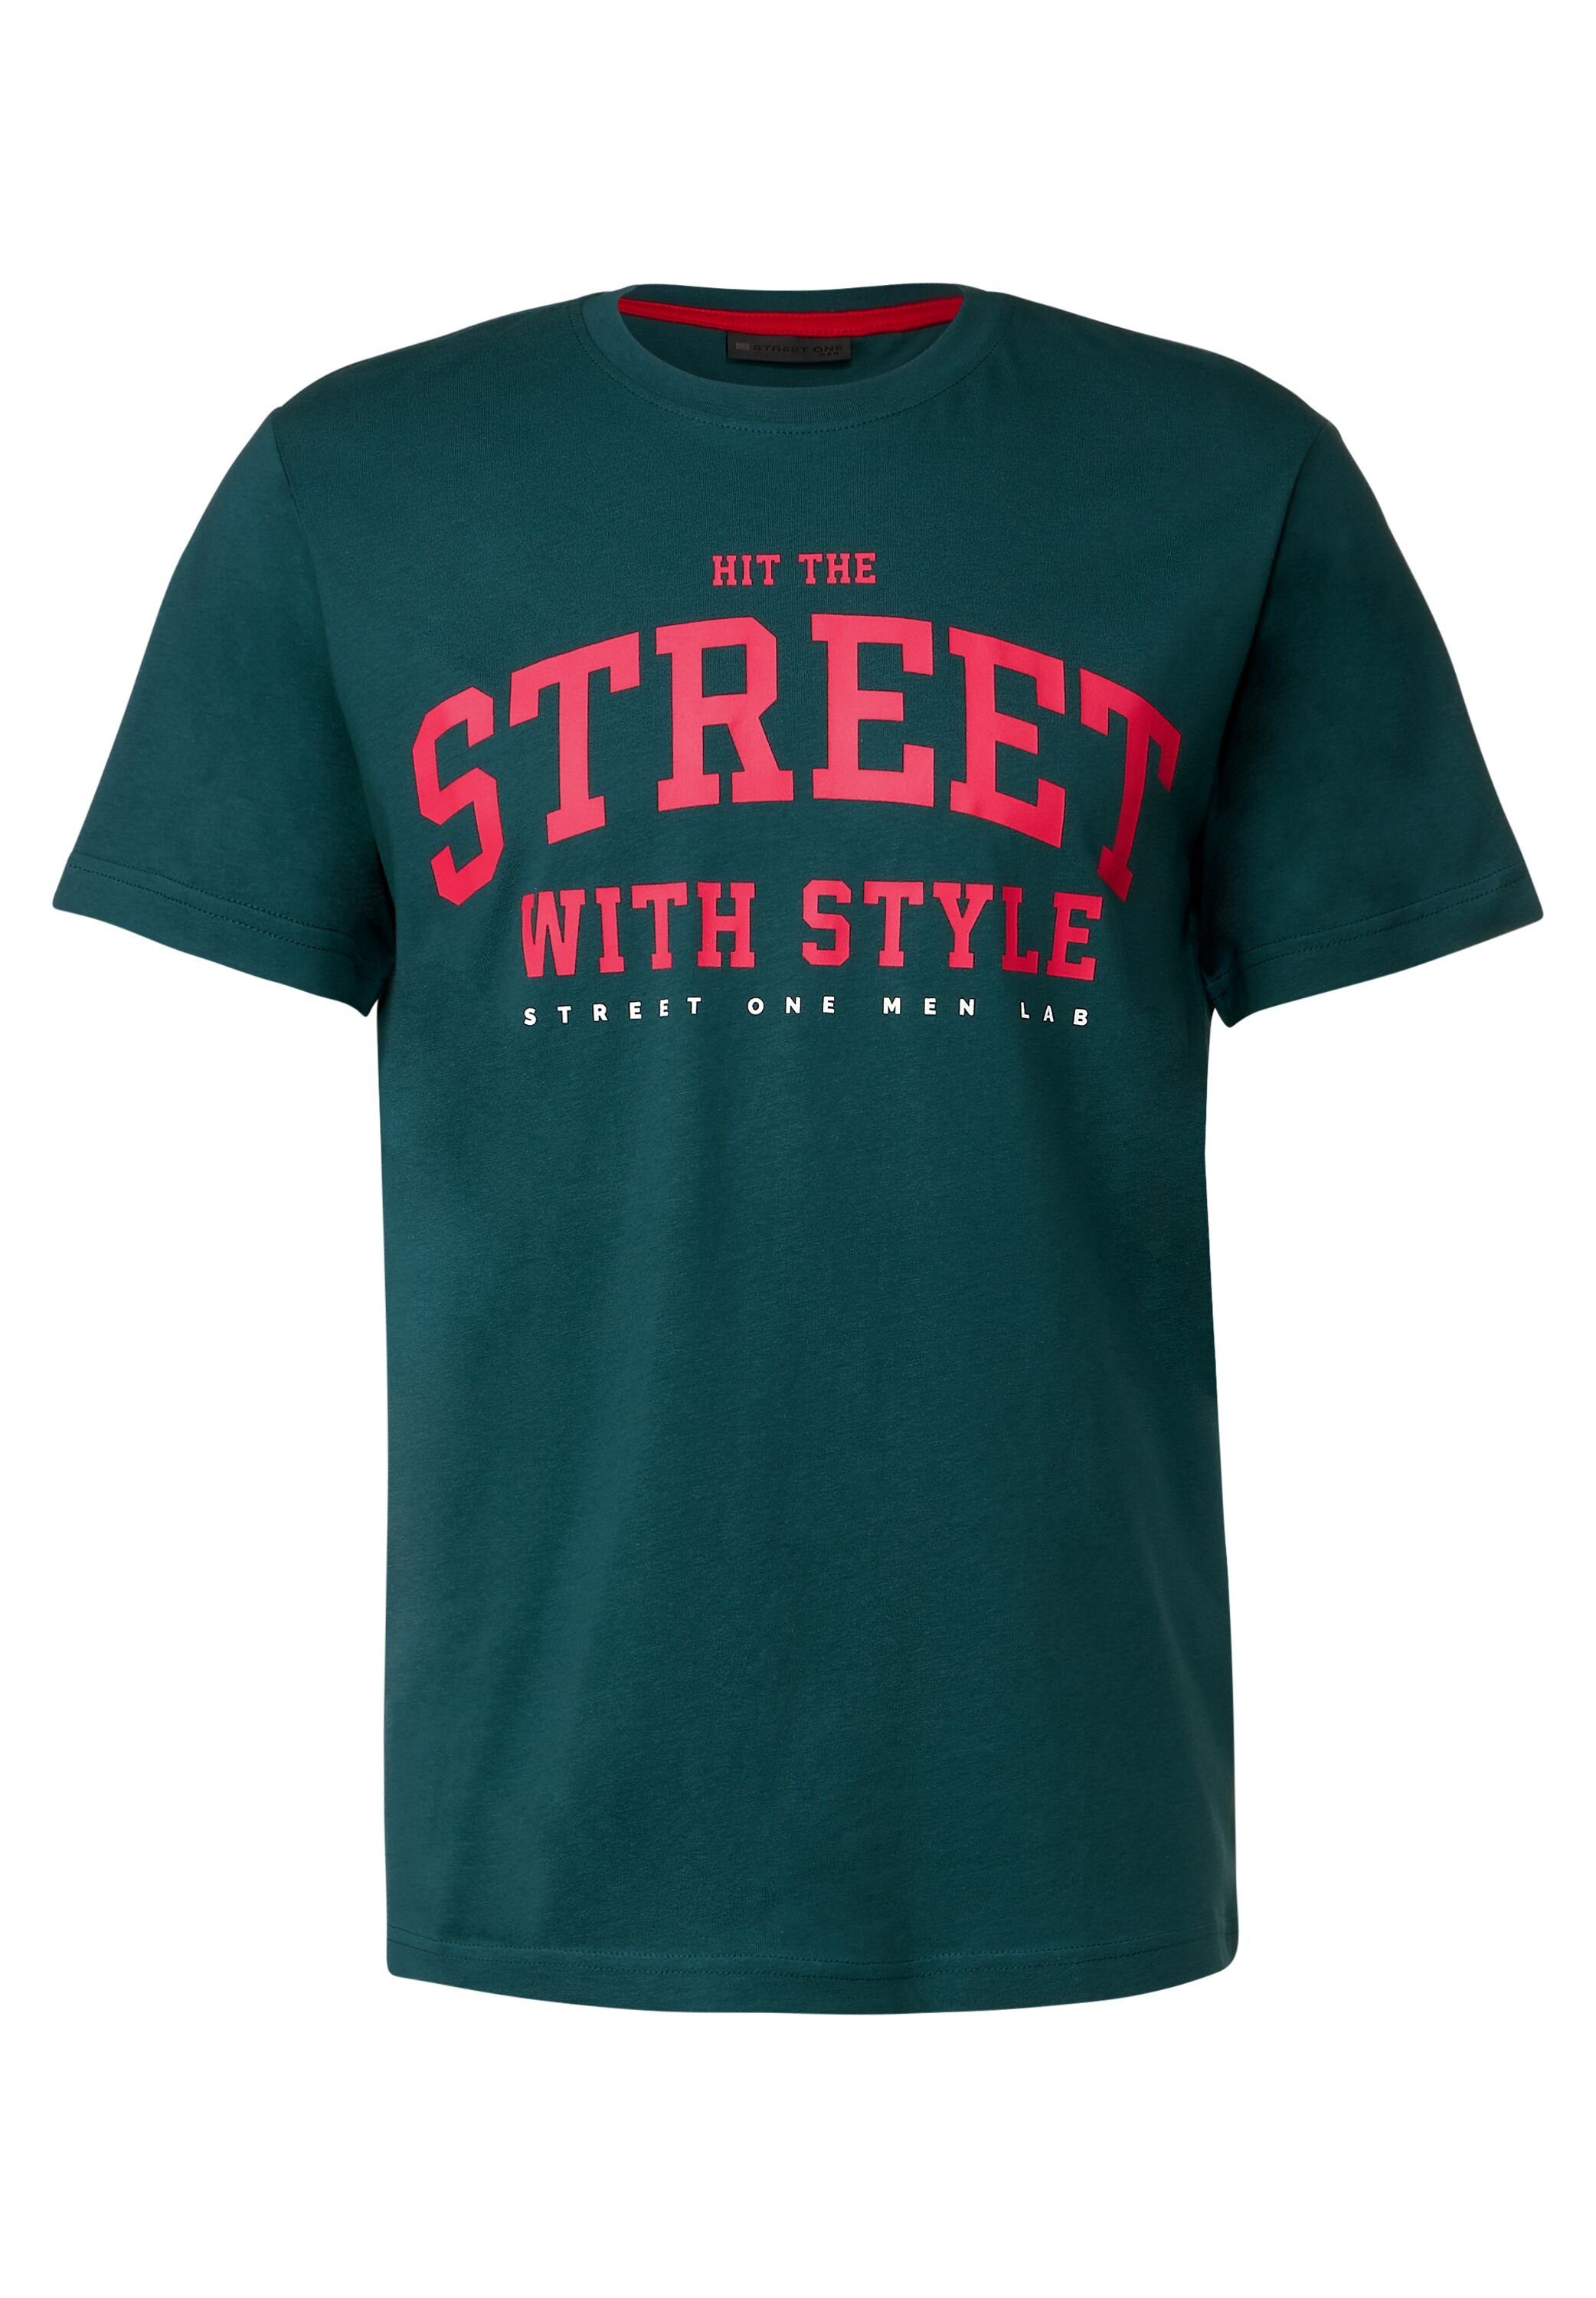 STREET ONE MEN T-Shirt oxford green